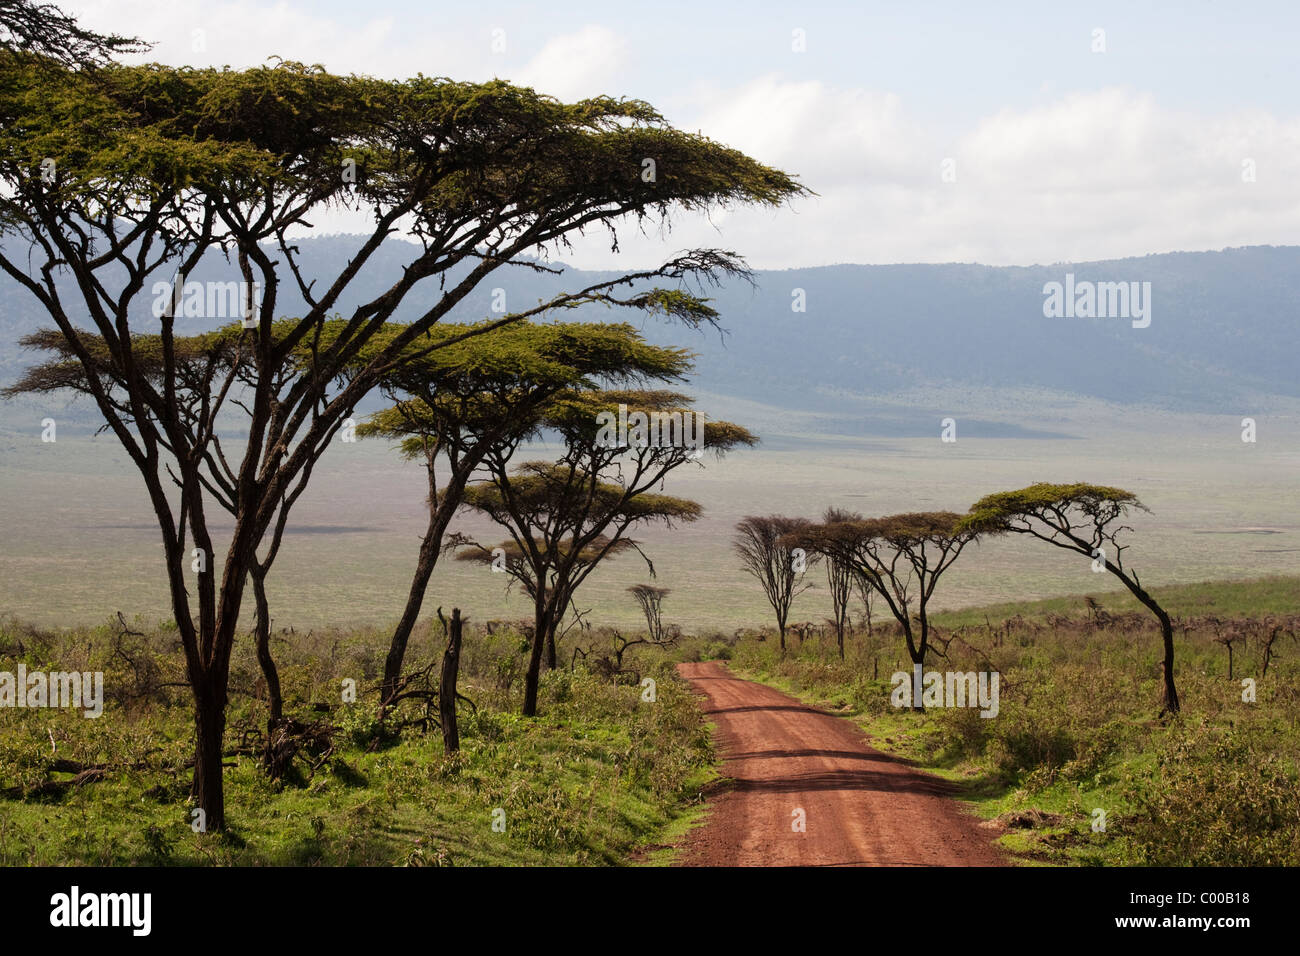 Road descending into Ngorongoro Crater, Tanzania, Africa Stock Photo